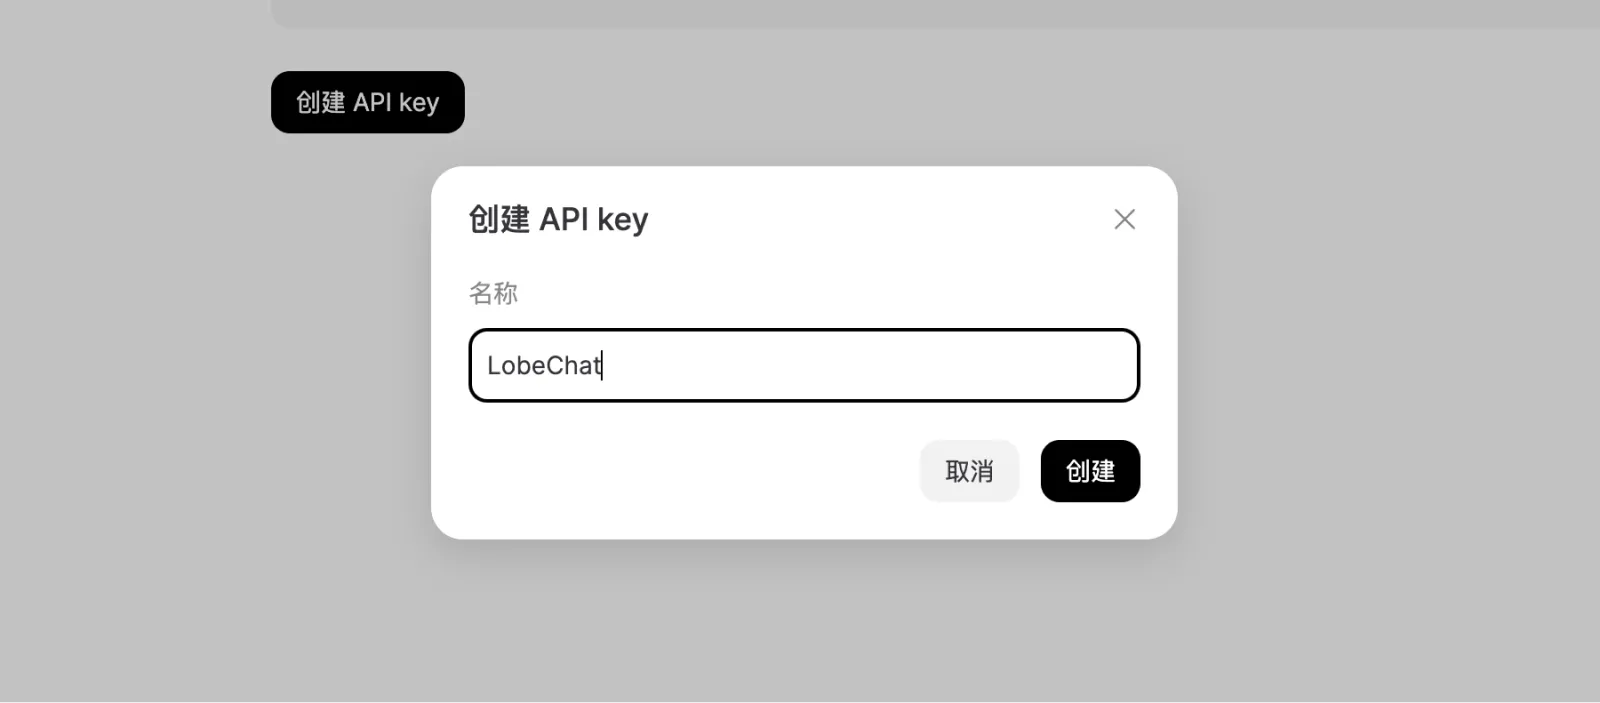 Ingresar nombre de la clave de API de Deepseek